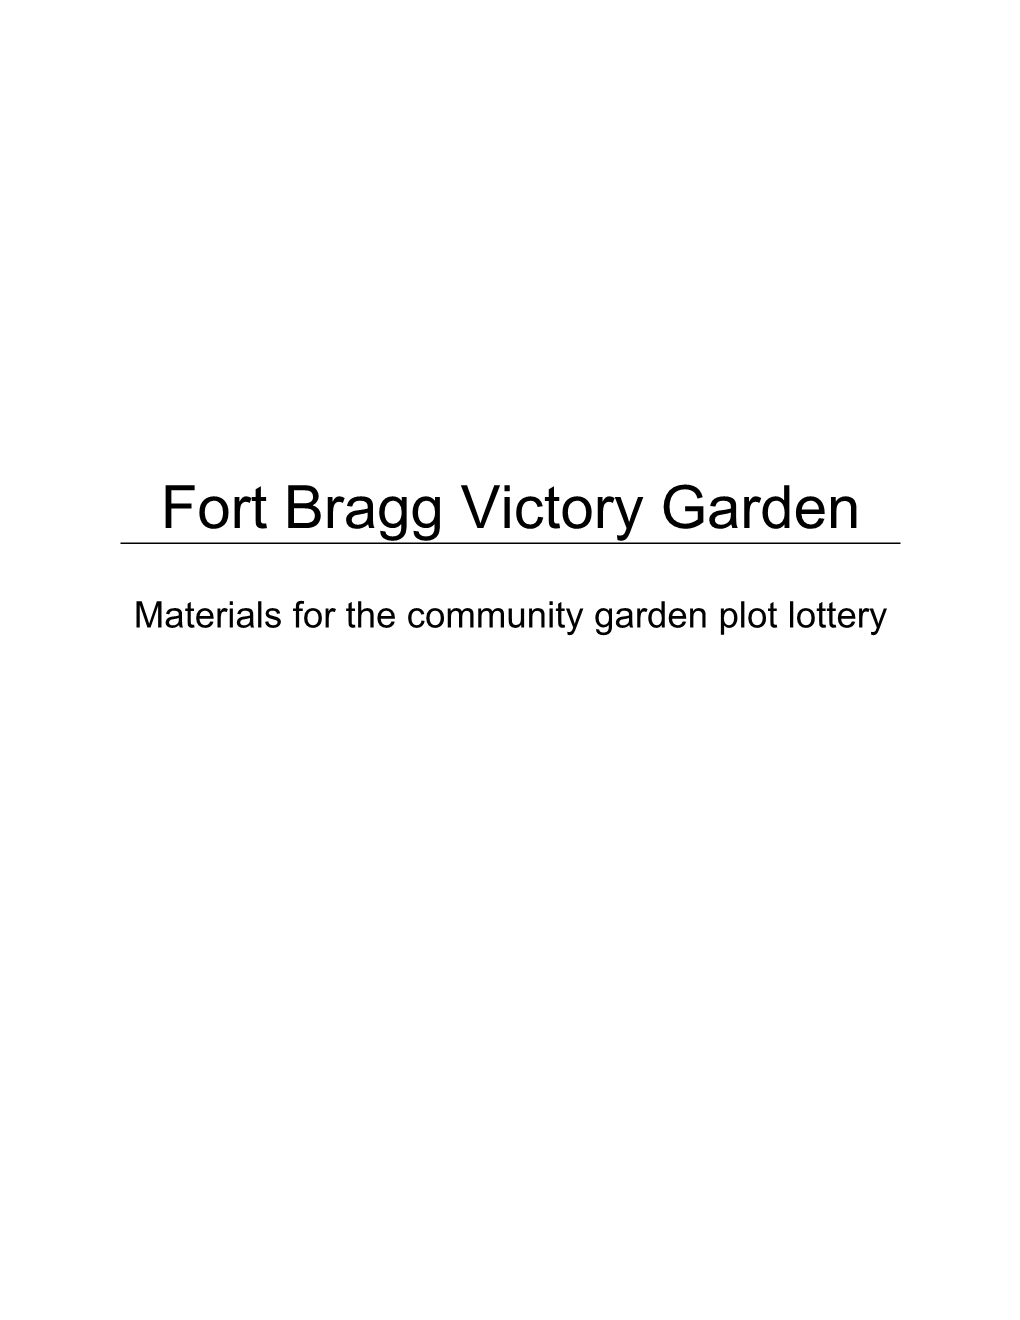 Materials for the Community Garden Plot Lottery